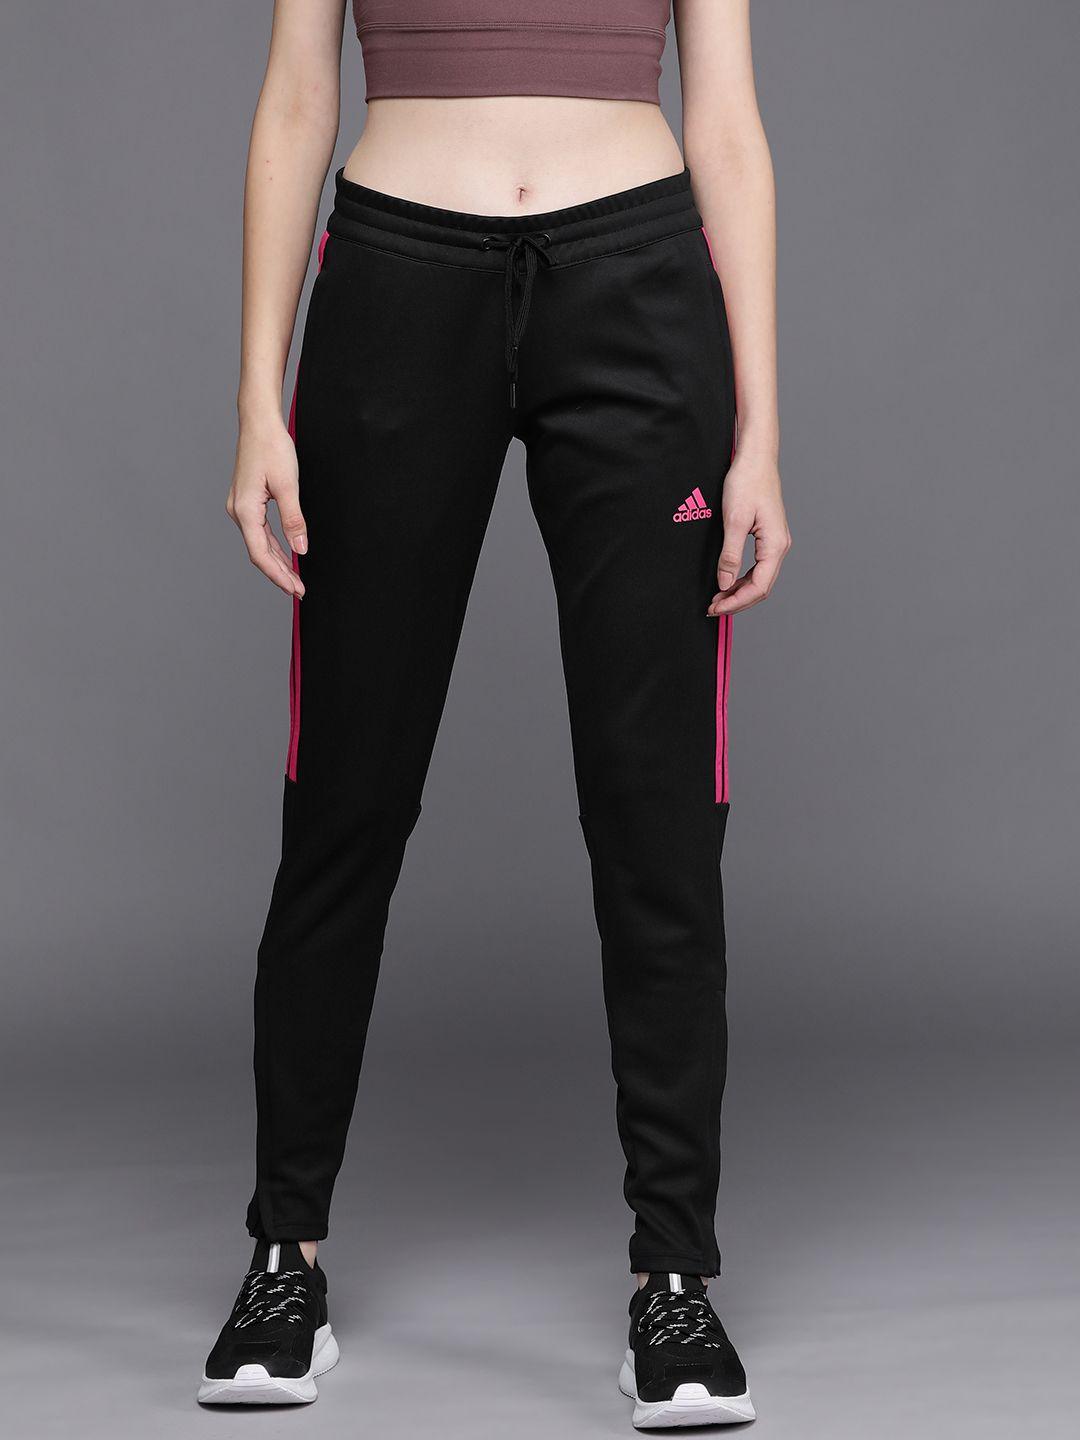 adidas-women-black-sereno-solid-aeroready-track-pants